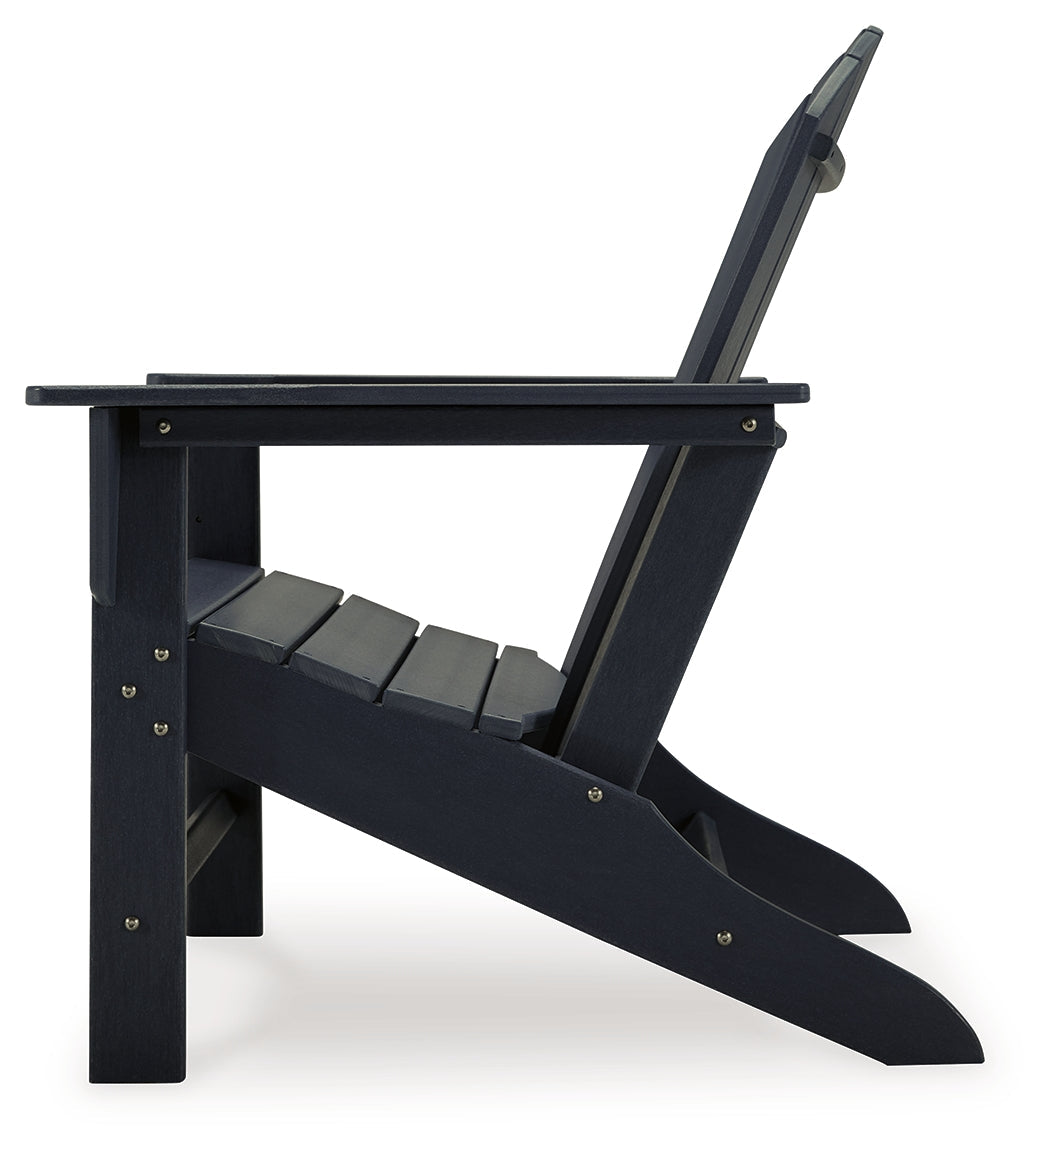 Sundown Treasure Black Adirondack Chair - P008-898 - Bien Home Furniture &amp; Electronics